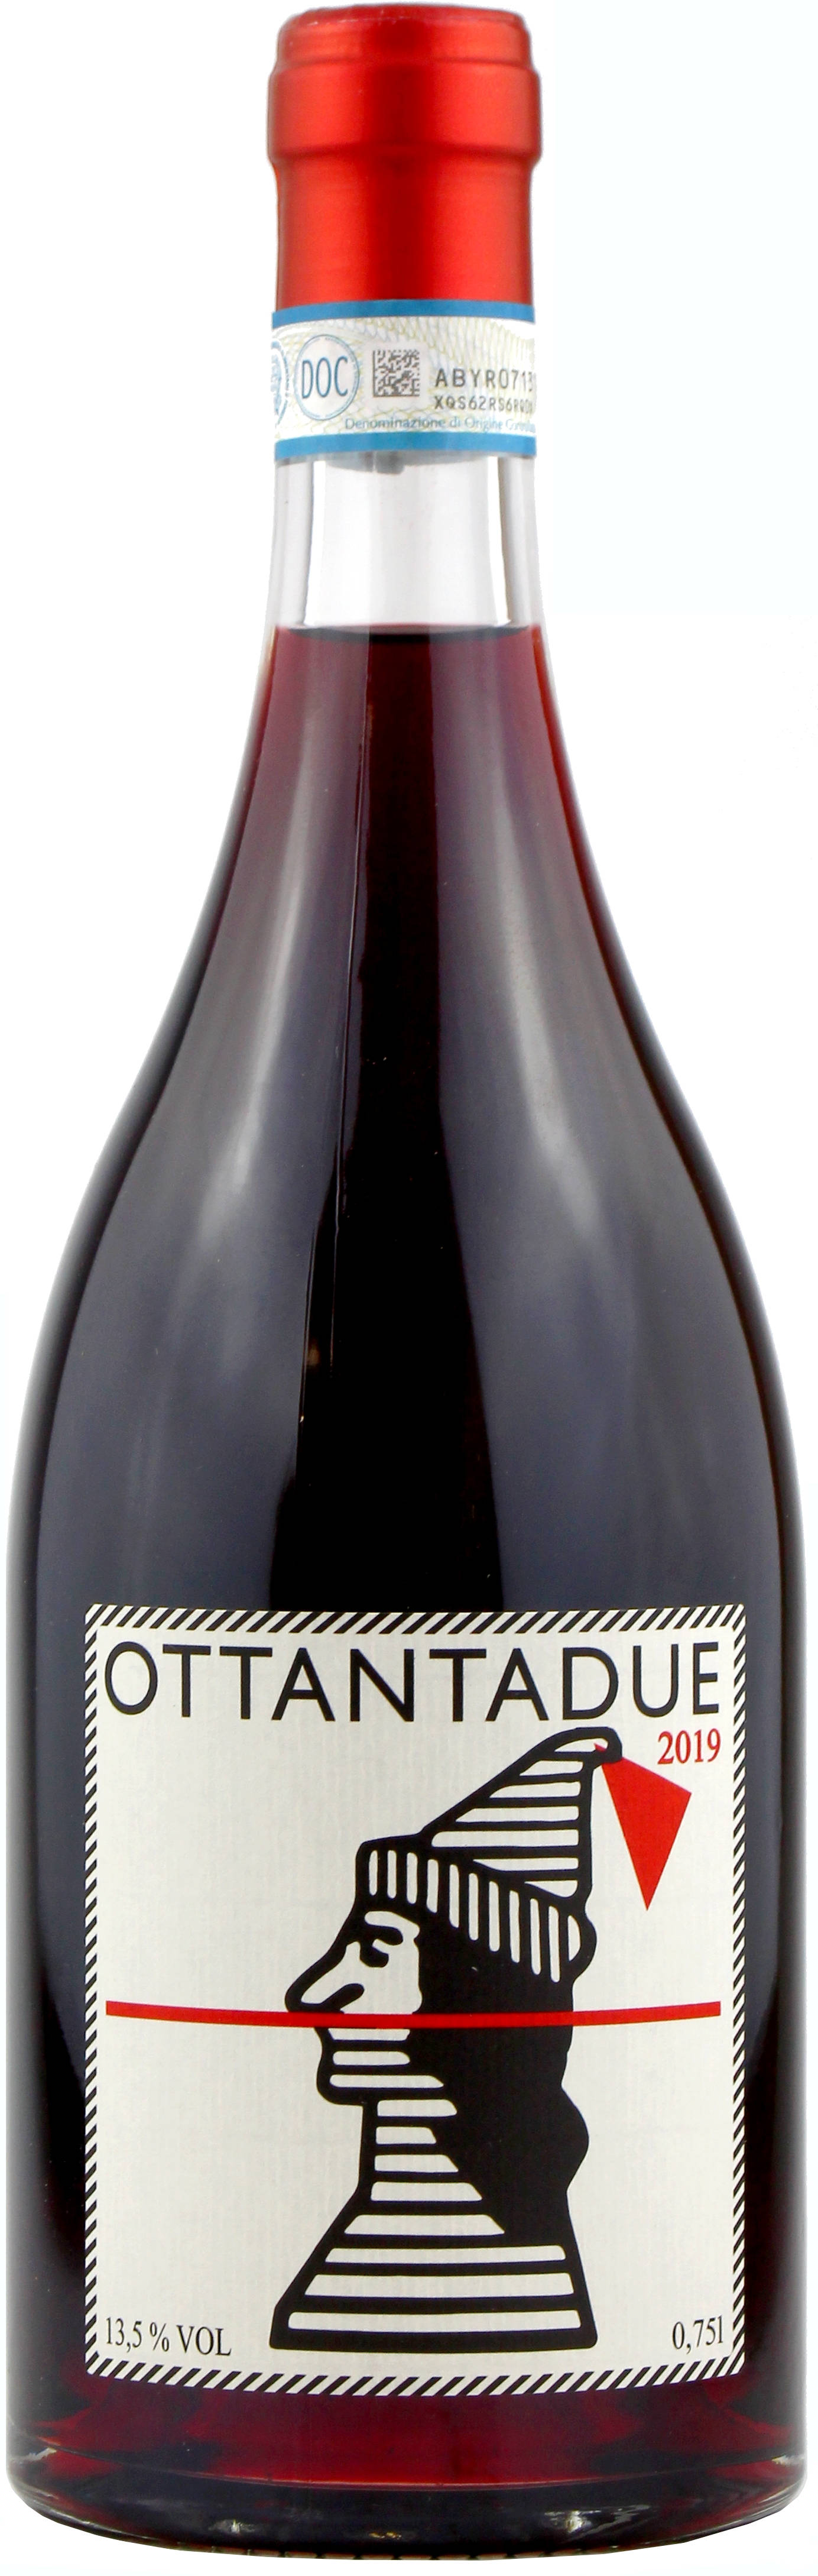 Il Carnasciale, 2019 Ottantadue, Rotwein, Toskana, Italien | Wein  Direktimport Scholz